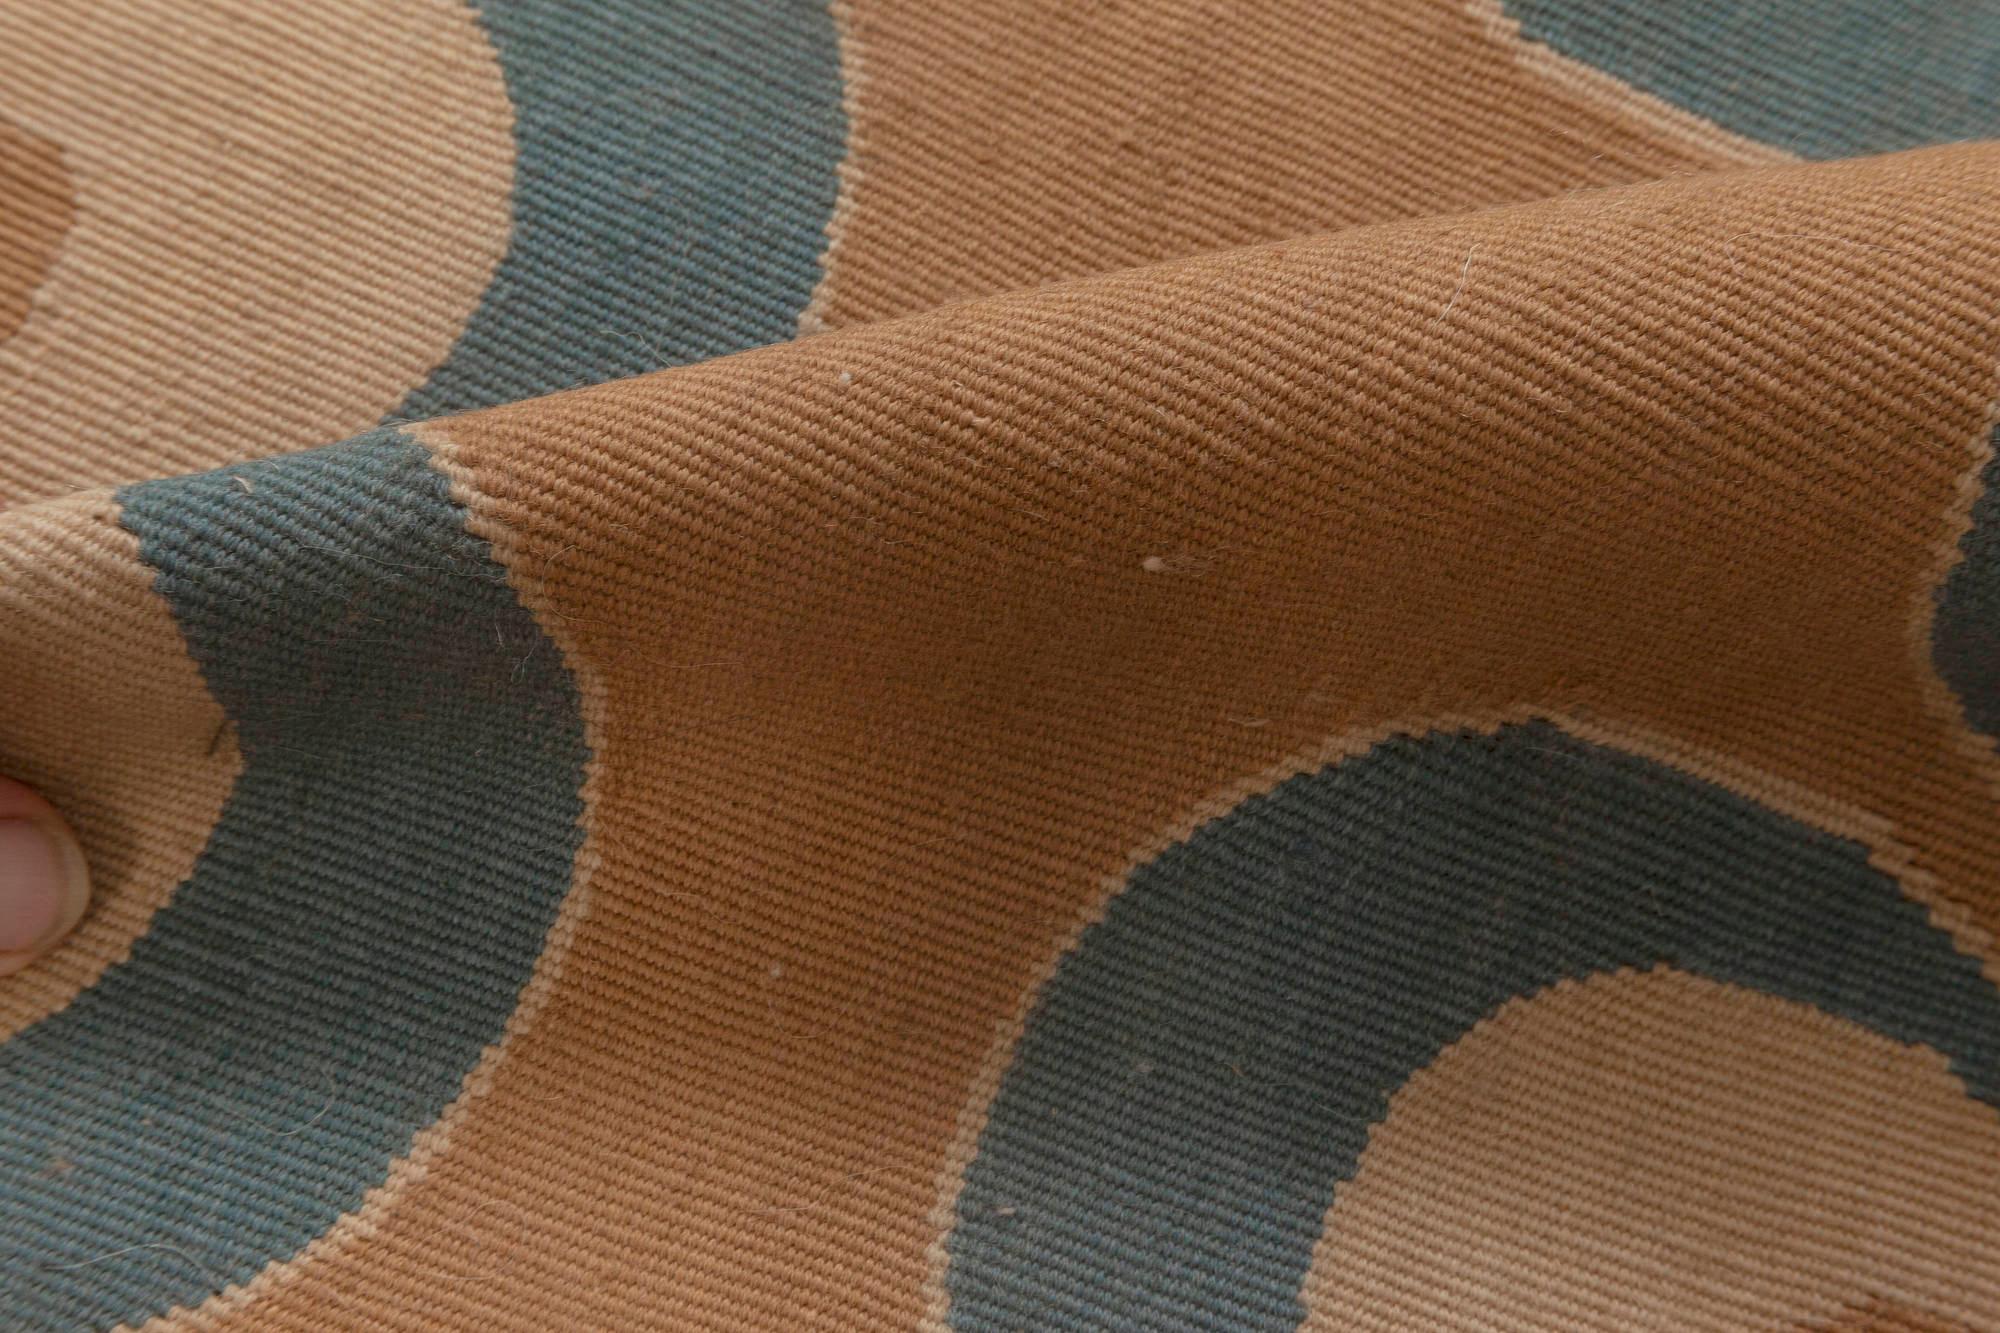 Aubusson style handmade bold modern rug by Doris Leslie Blau.
Size: 5.0